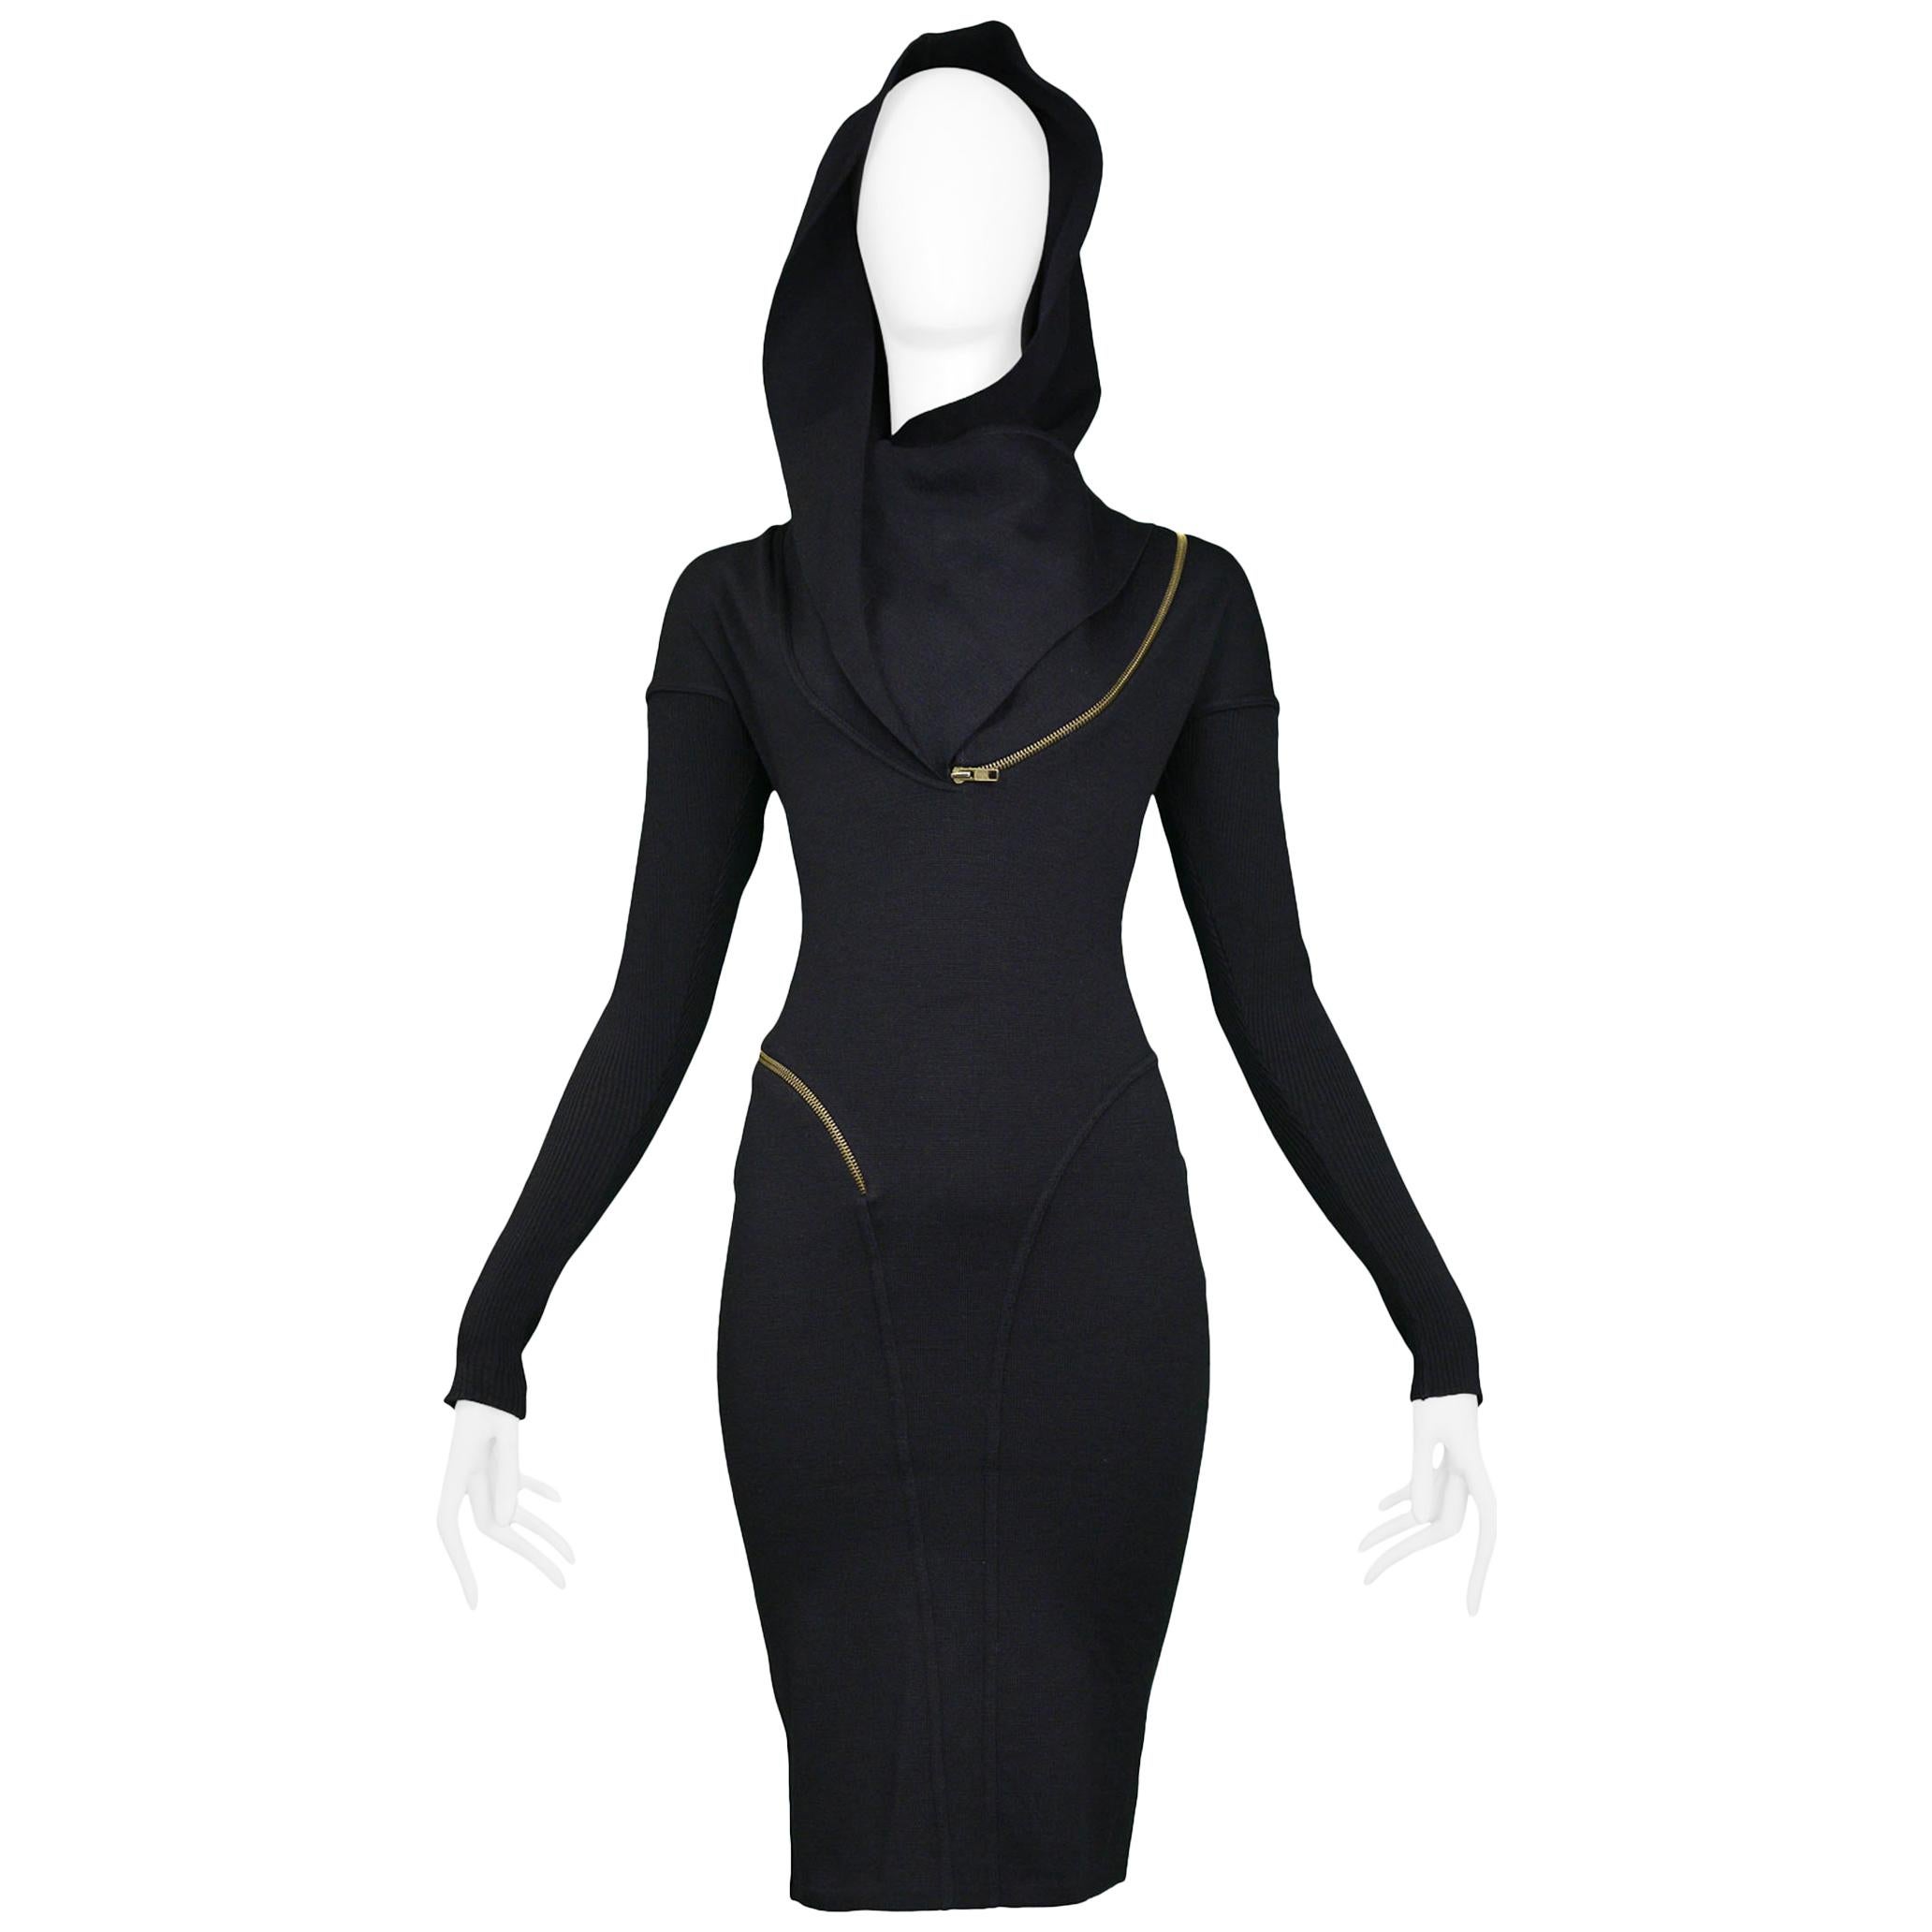 Iconic 1986 Black Hooded Zipper Dress